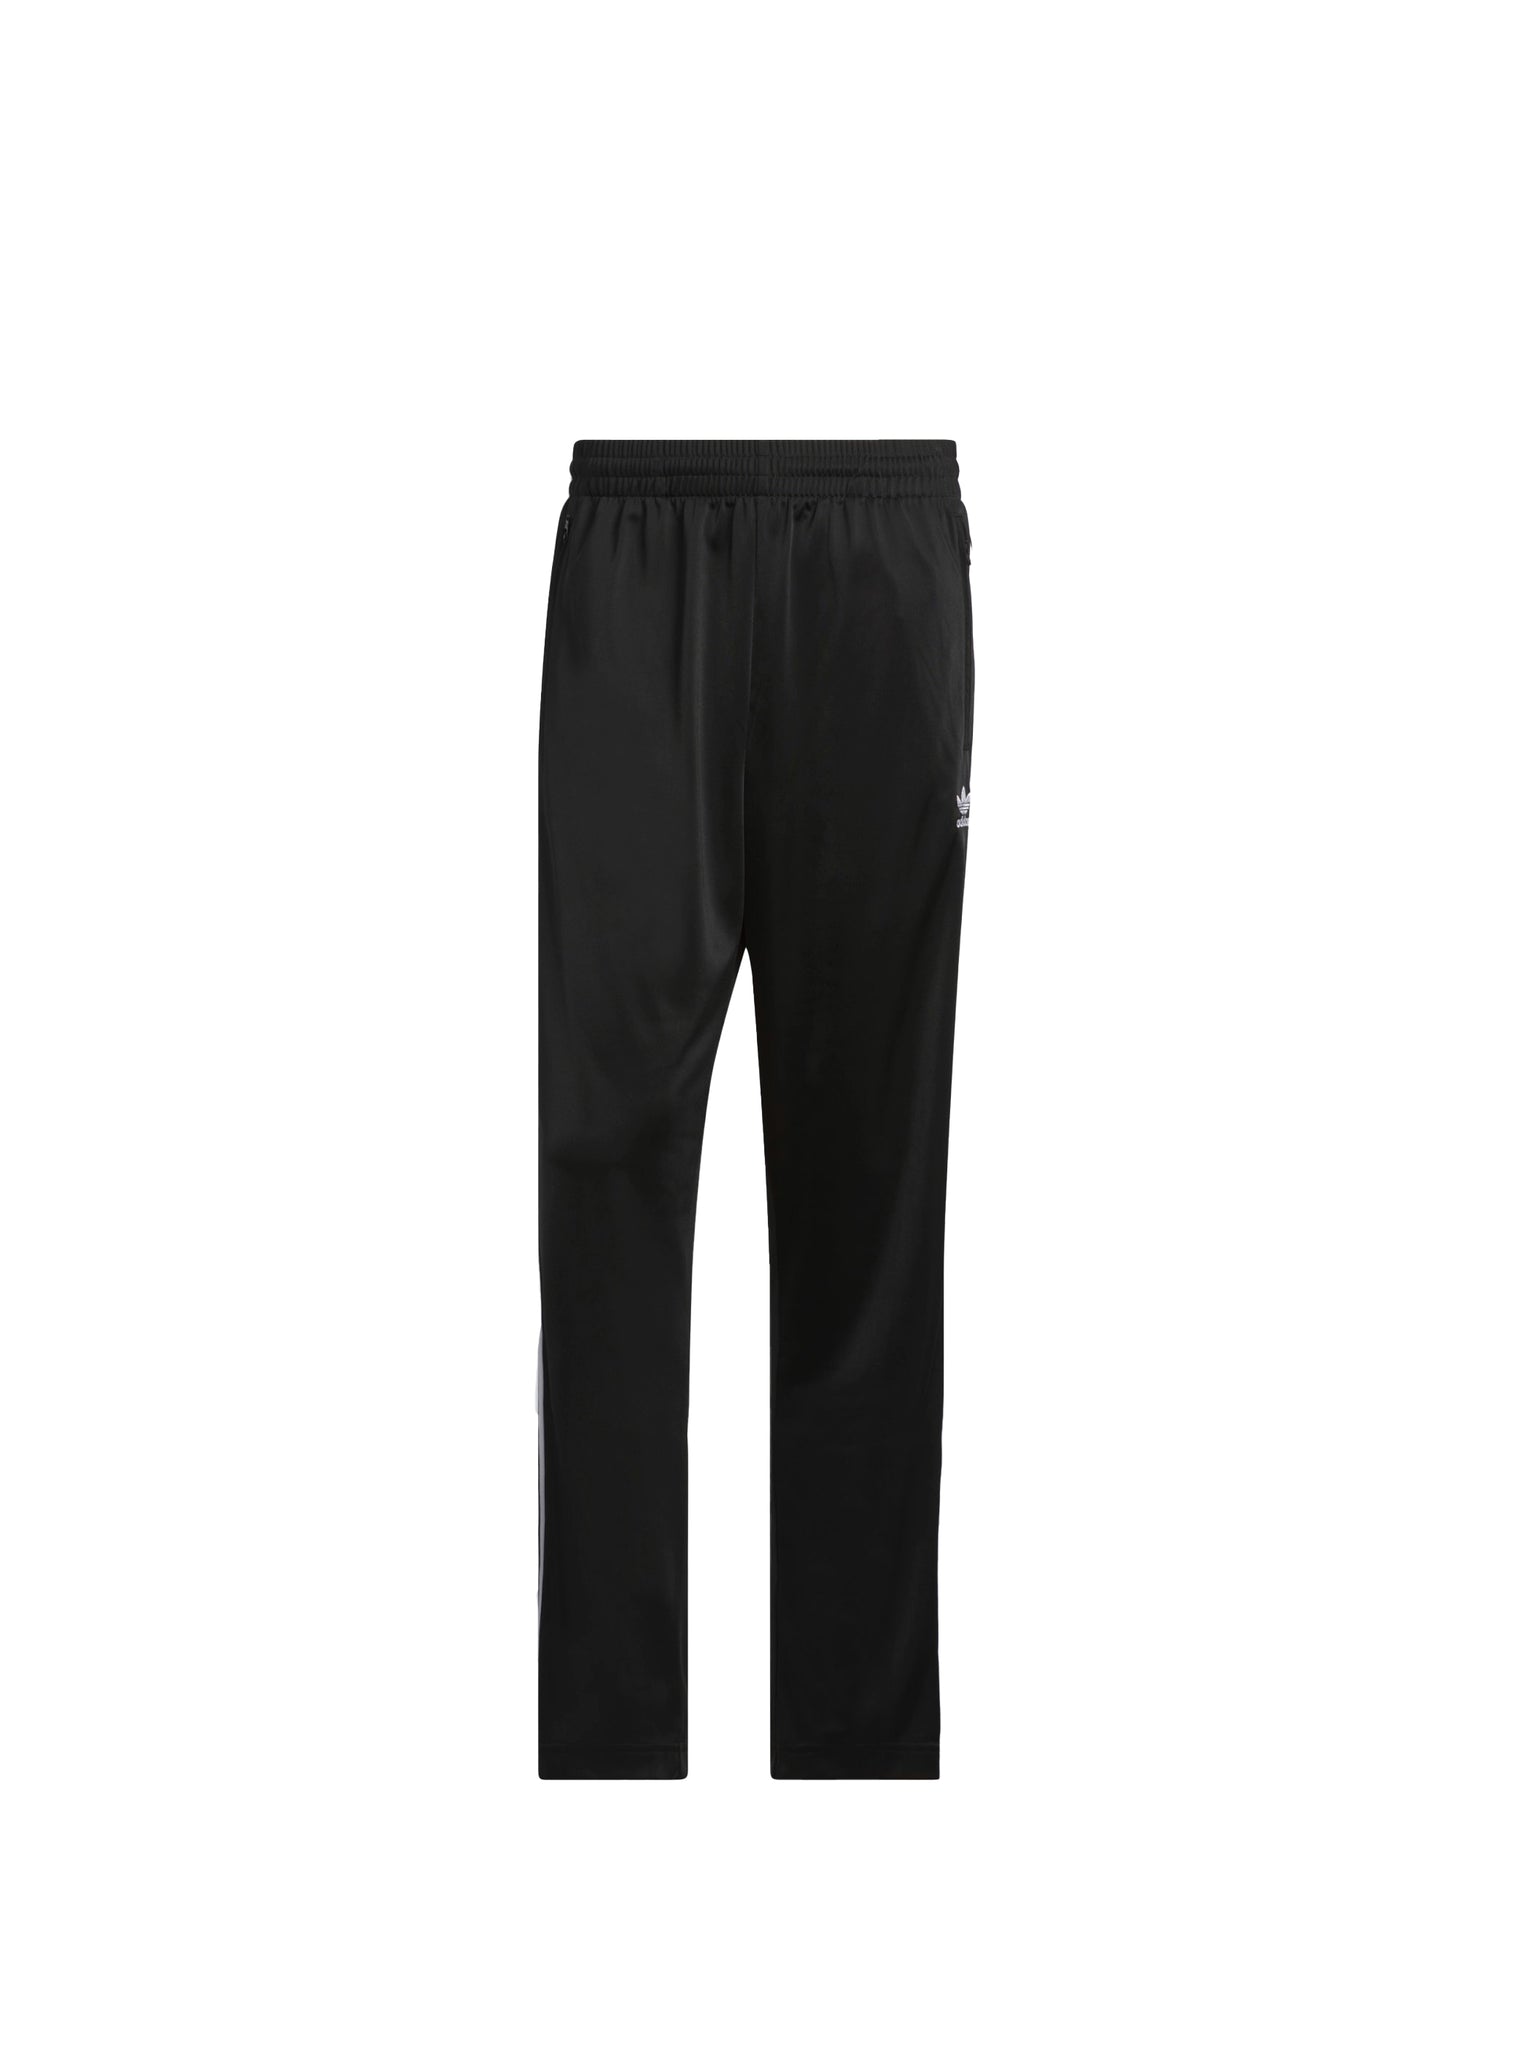 Adidas Firebird Tp Black White Men's Pants